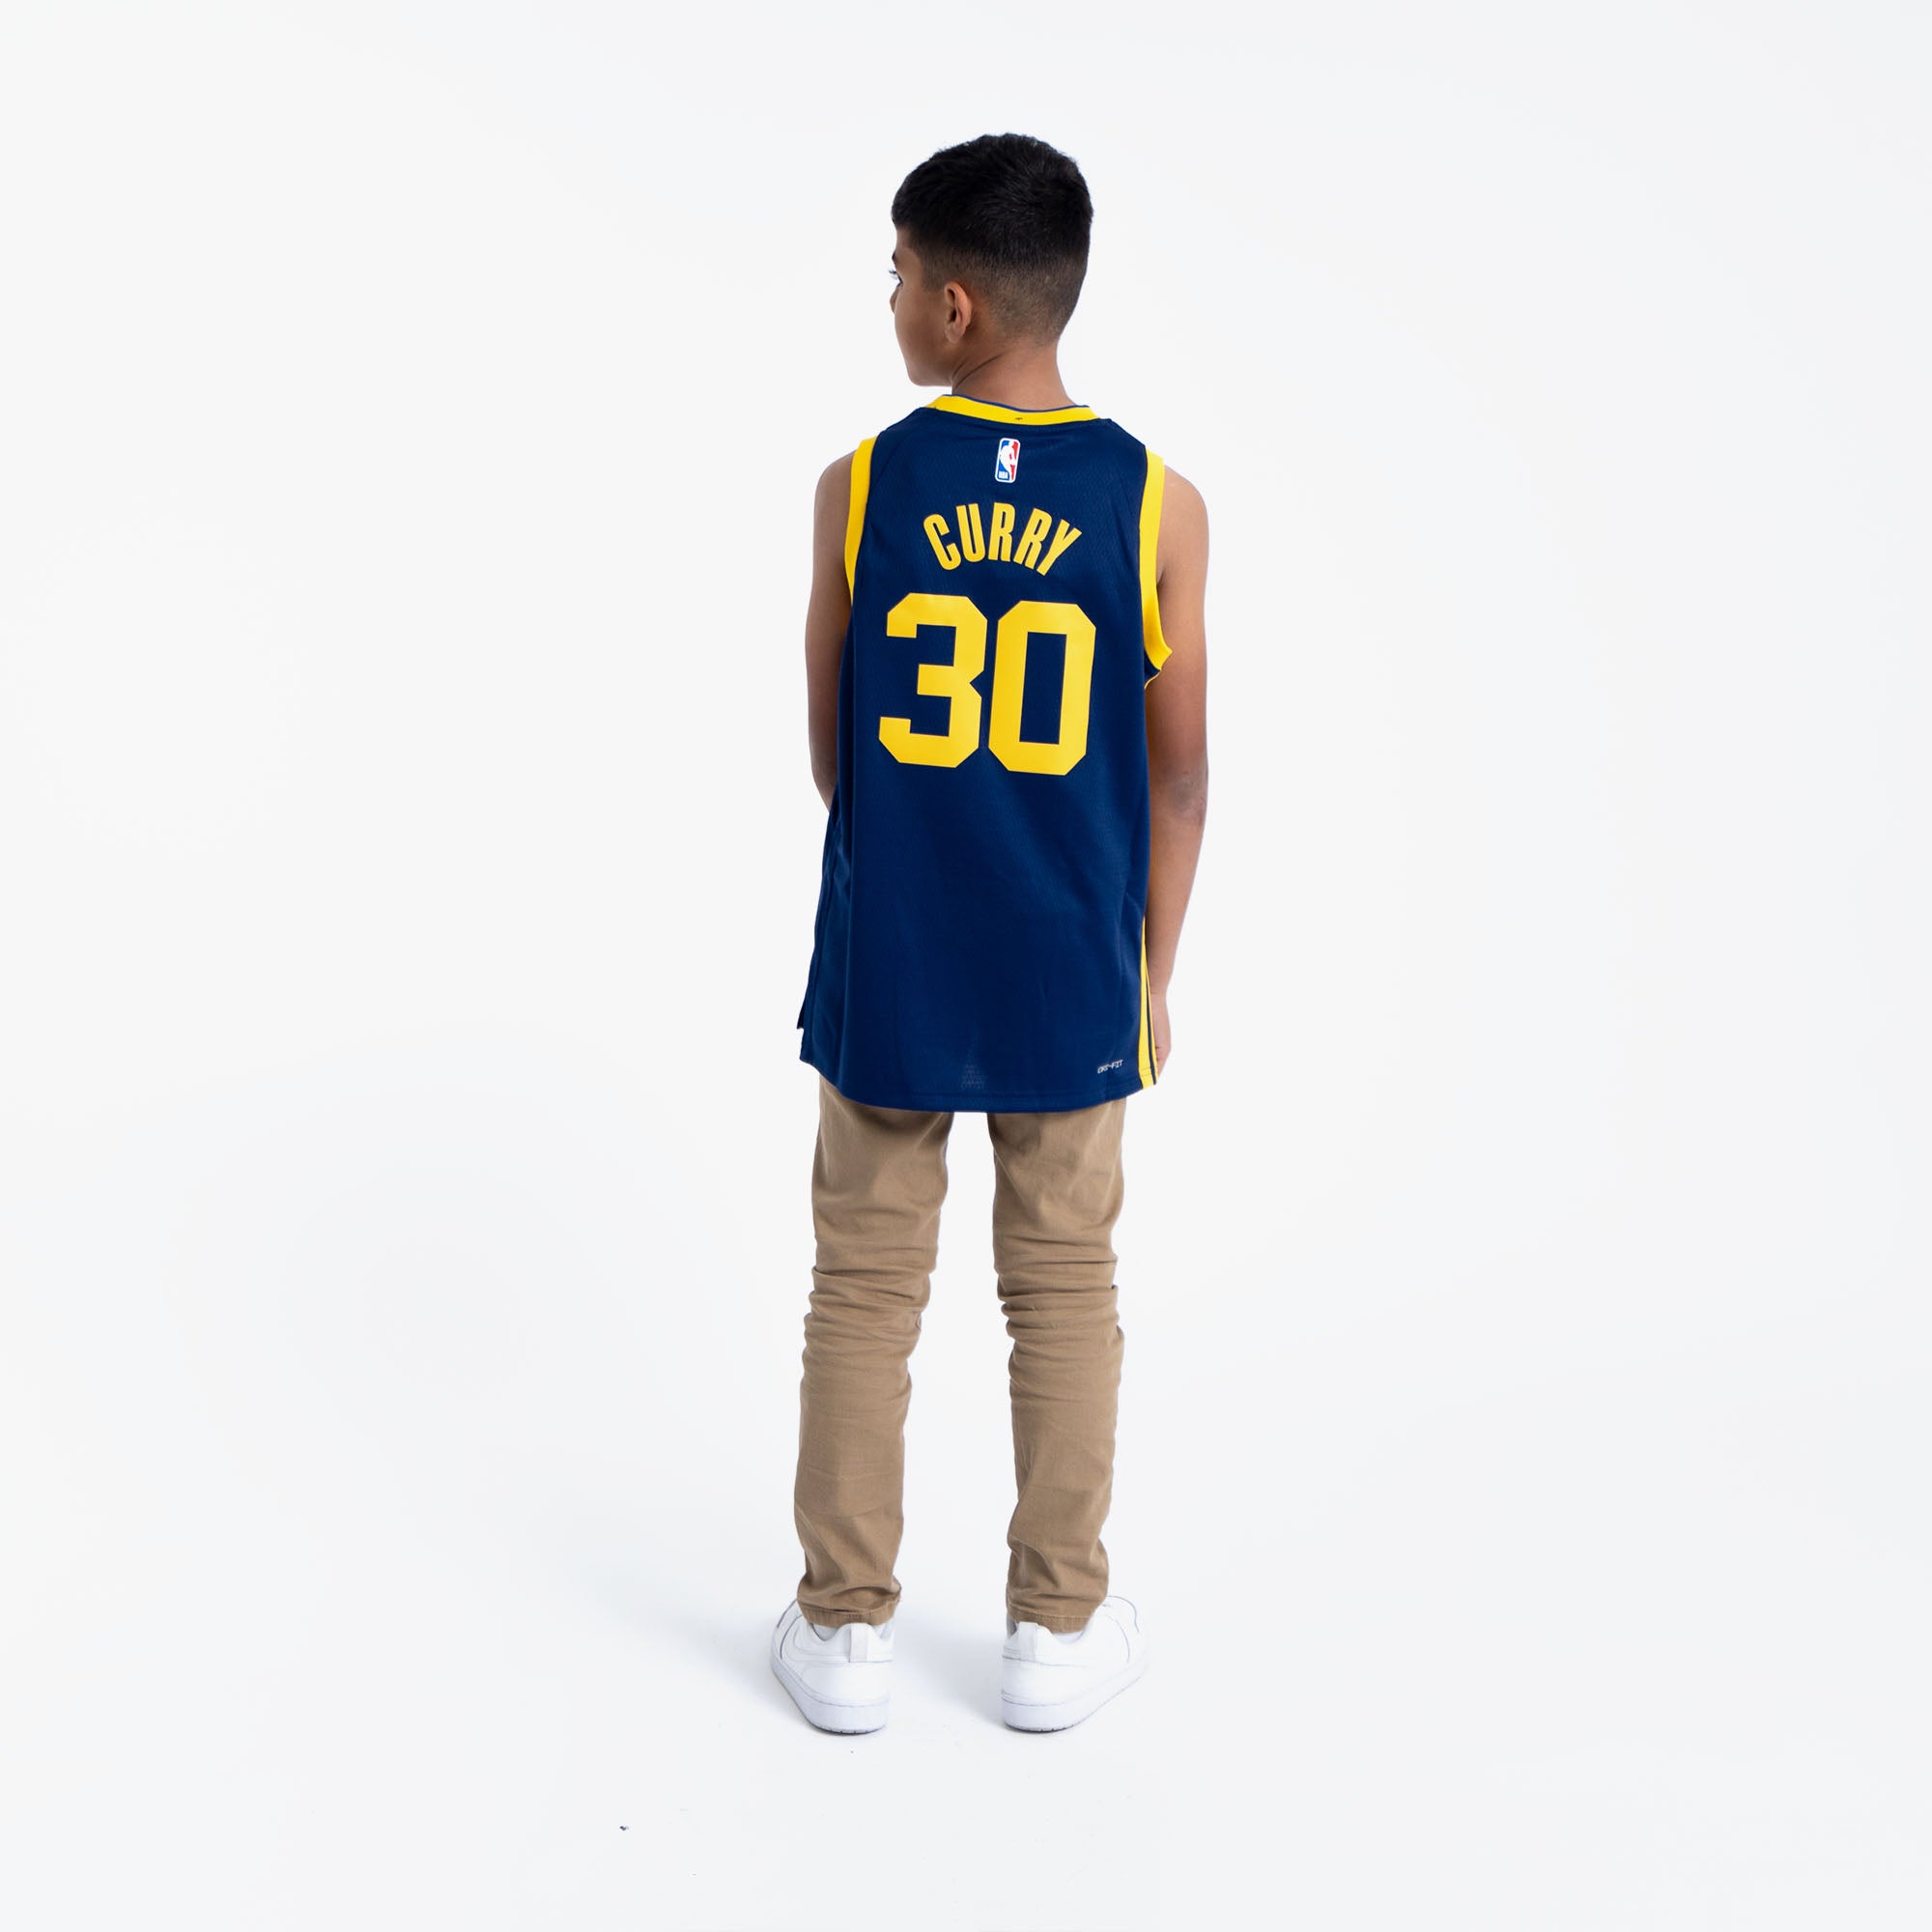 Stephen Curry Golden State Warriors Jordan Brand Unisex Swingman Jersey -  Statement Edition - Navy